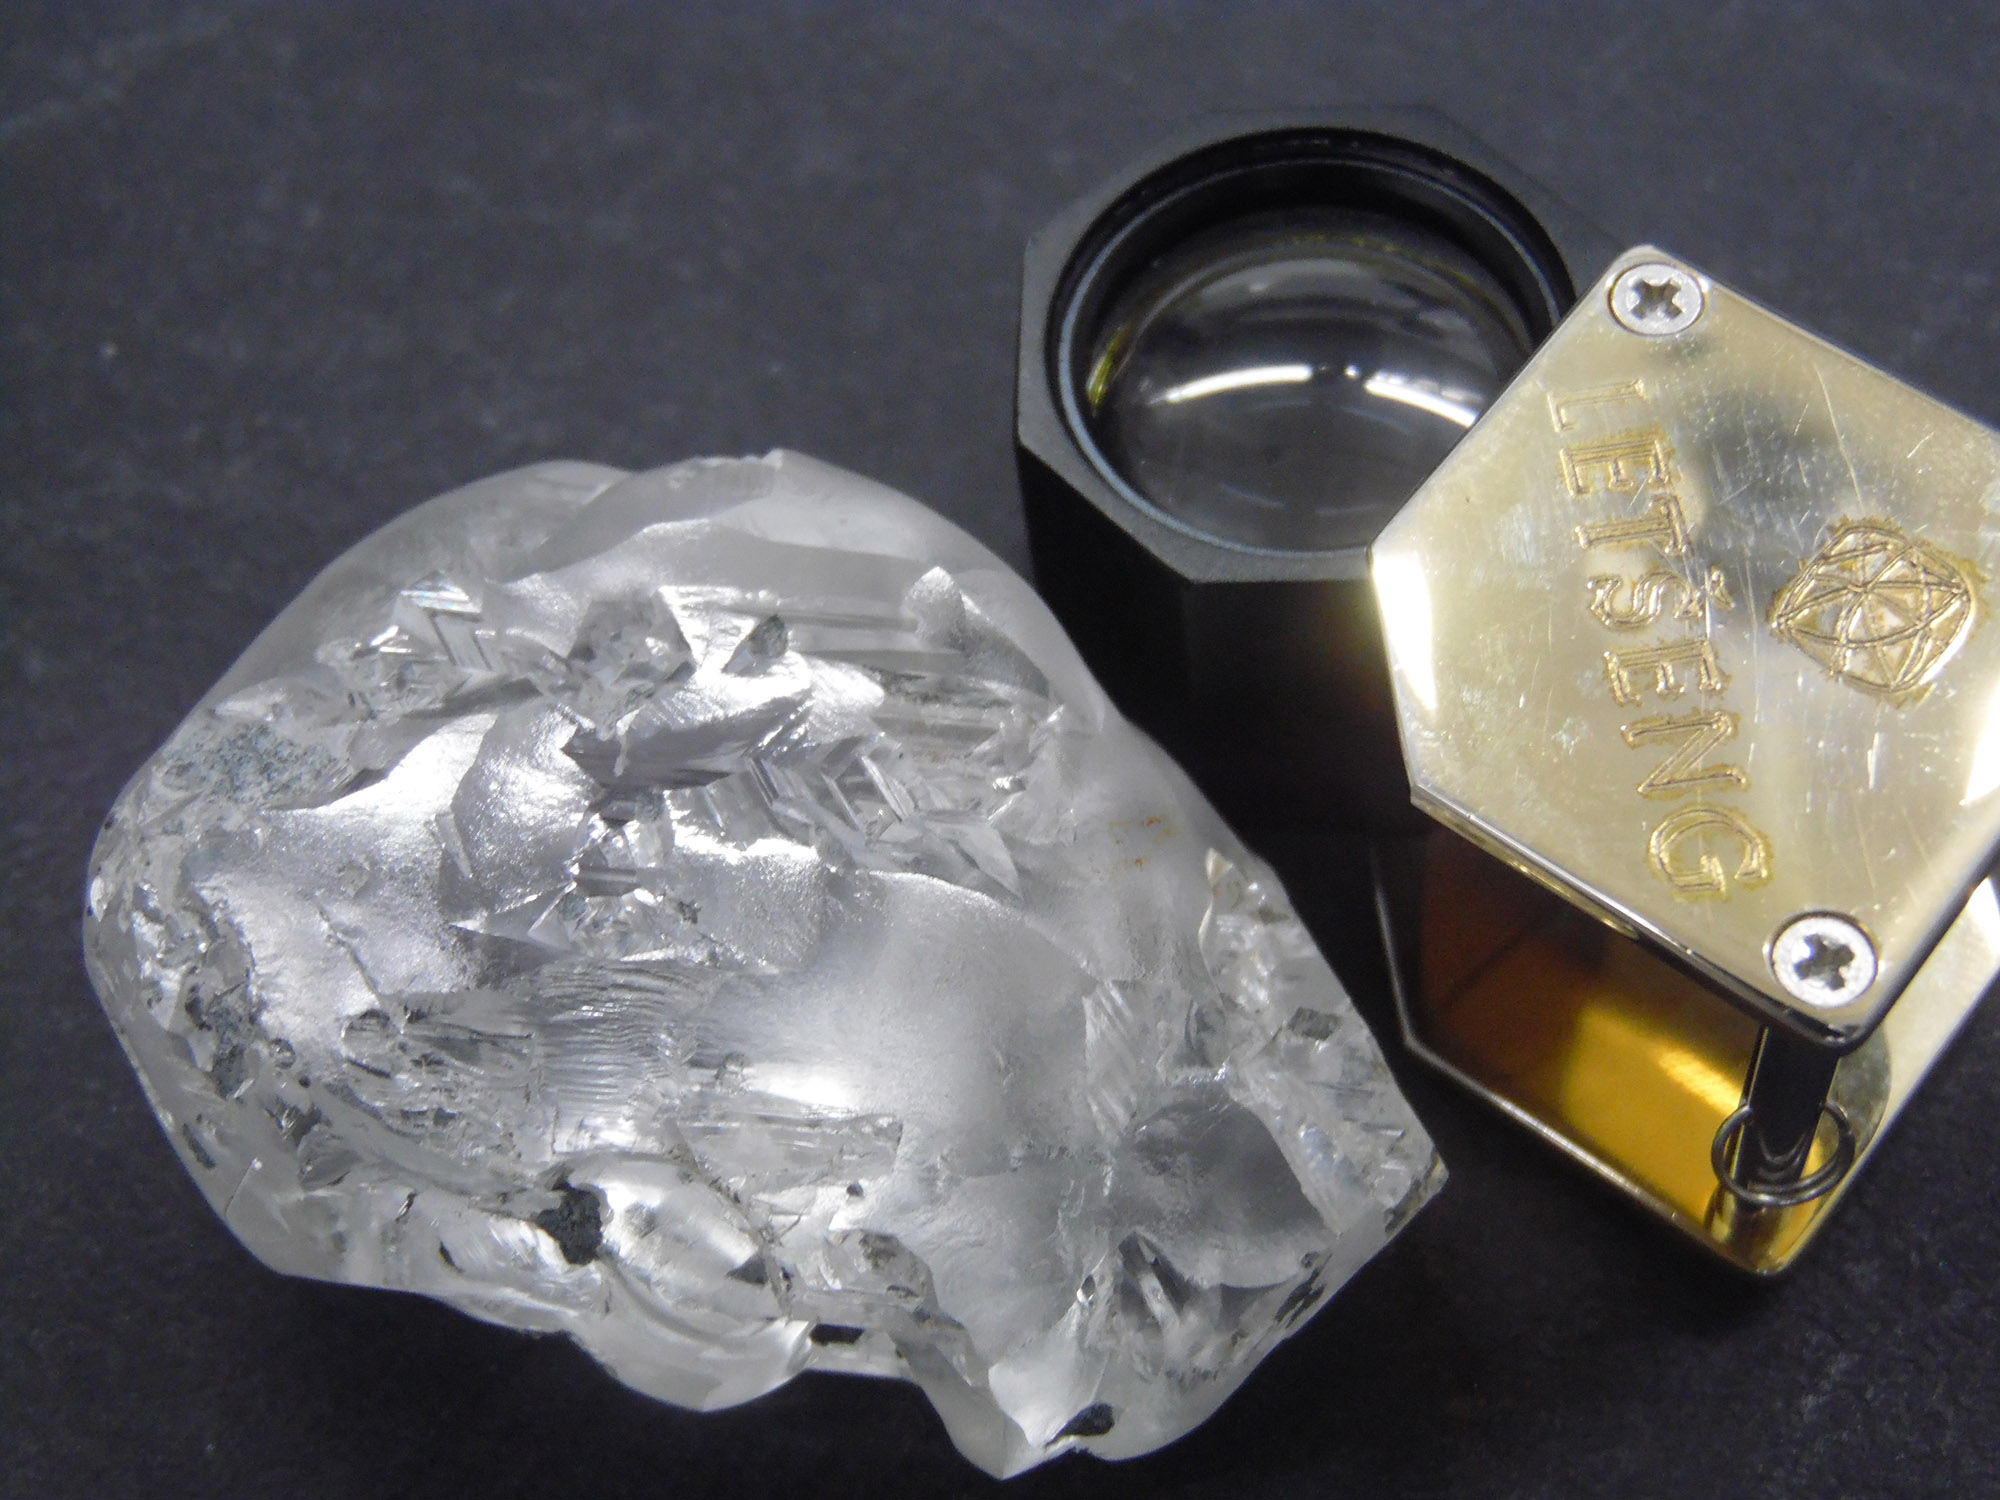 World's largest rough diamond found – Ascot Diamonds